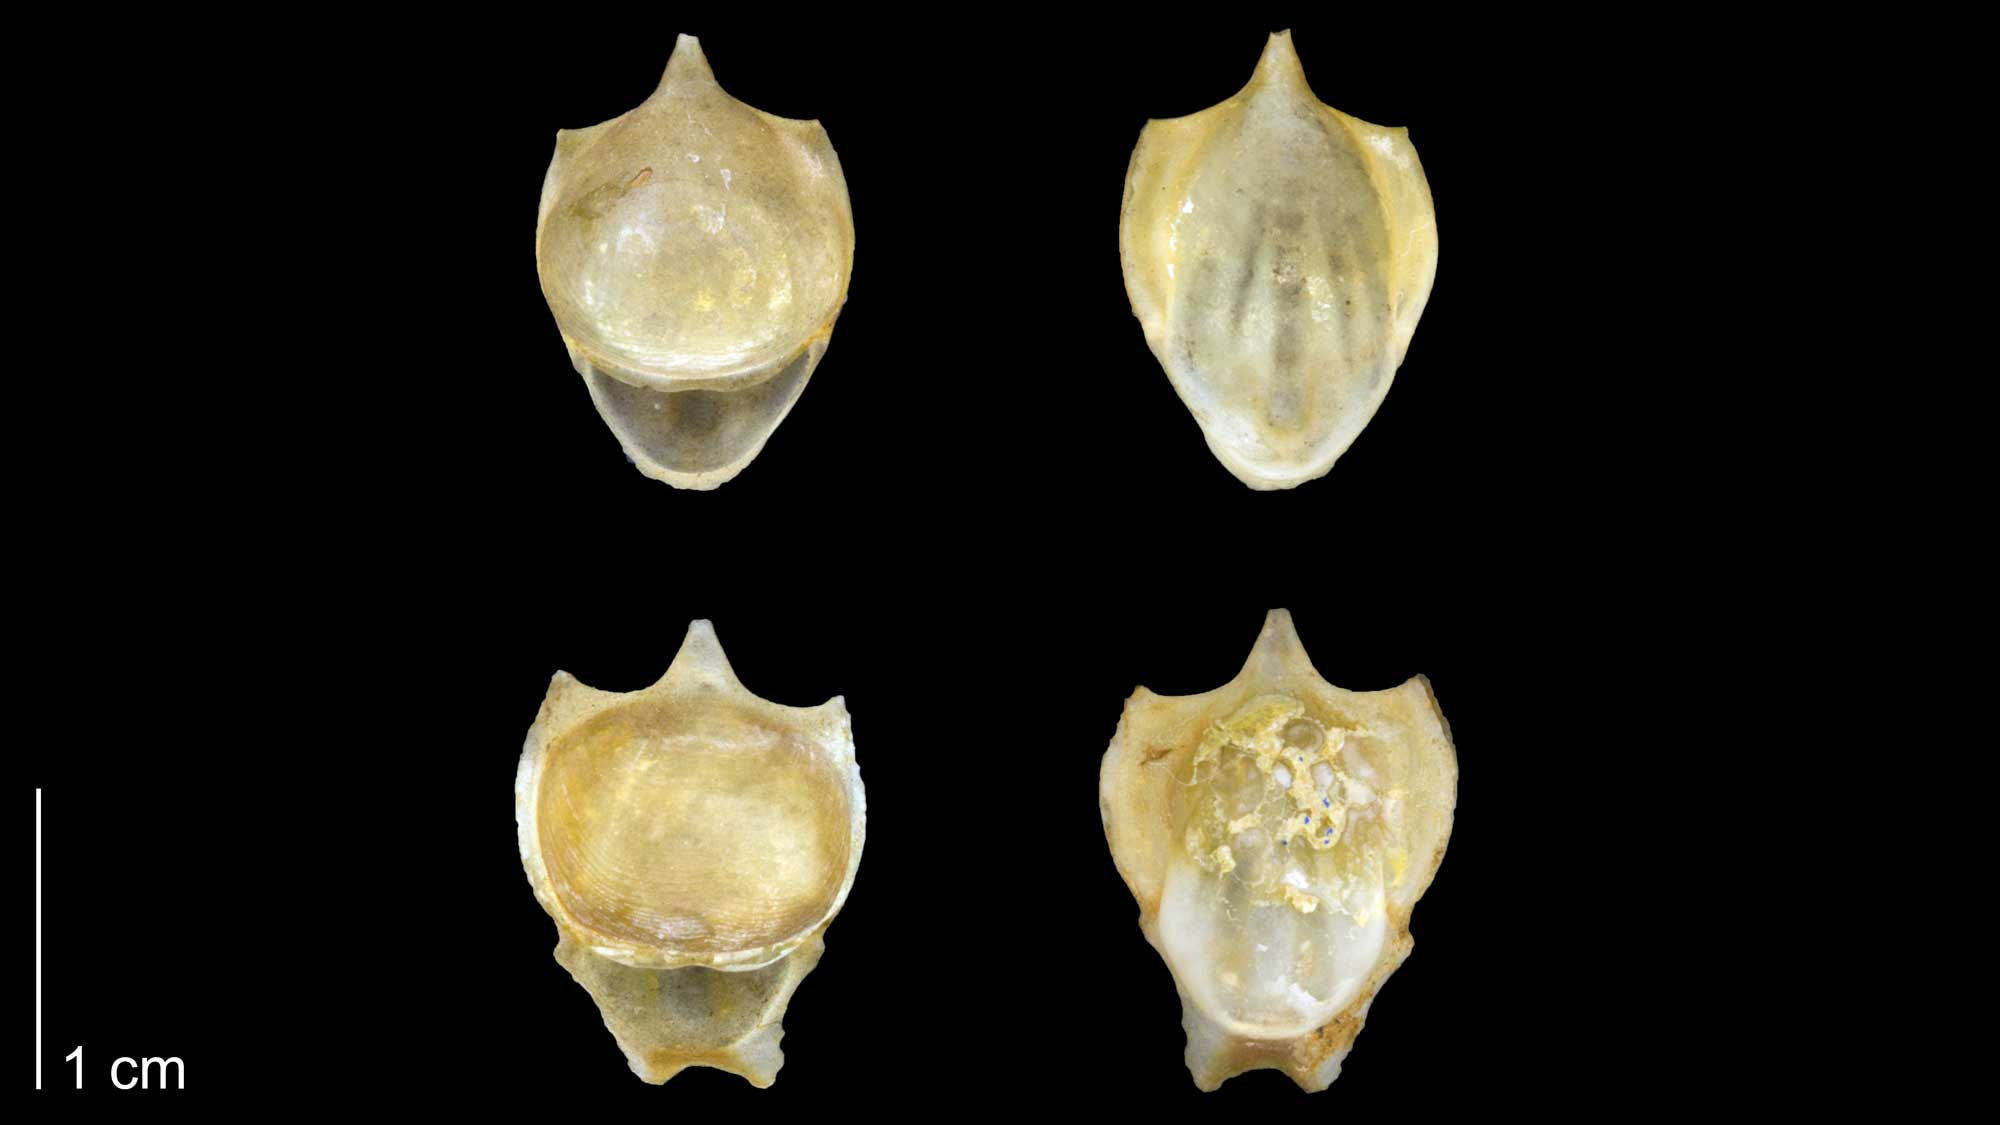 Photographs of specimens of the modern pteropod Cavolinia tridentata.